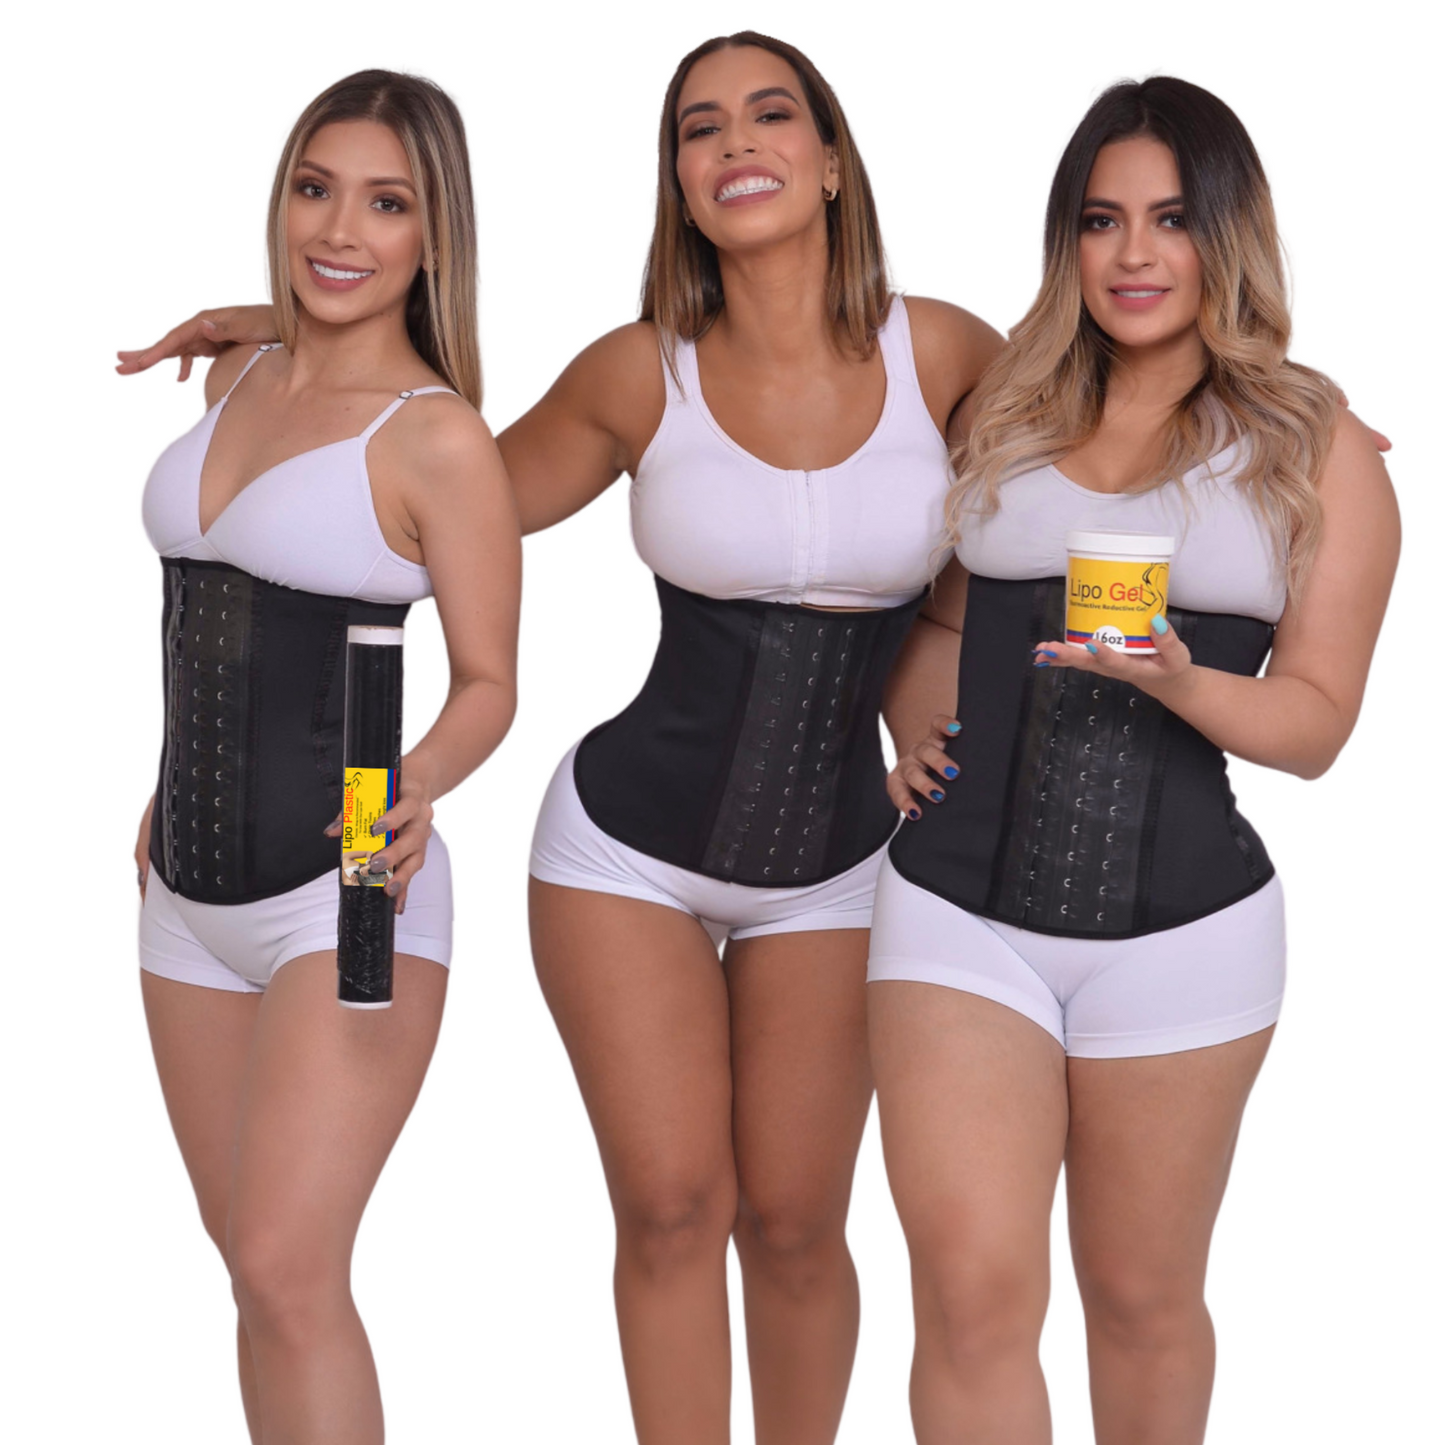 The Complete waist snatching bungle (Lipo Gel 16 oz+ Lipo Plastic + Waist trainer)